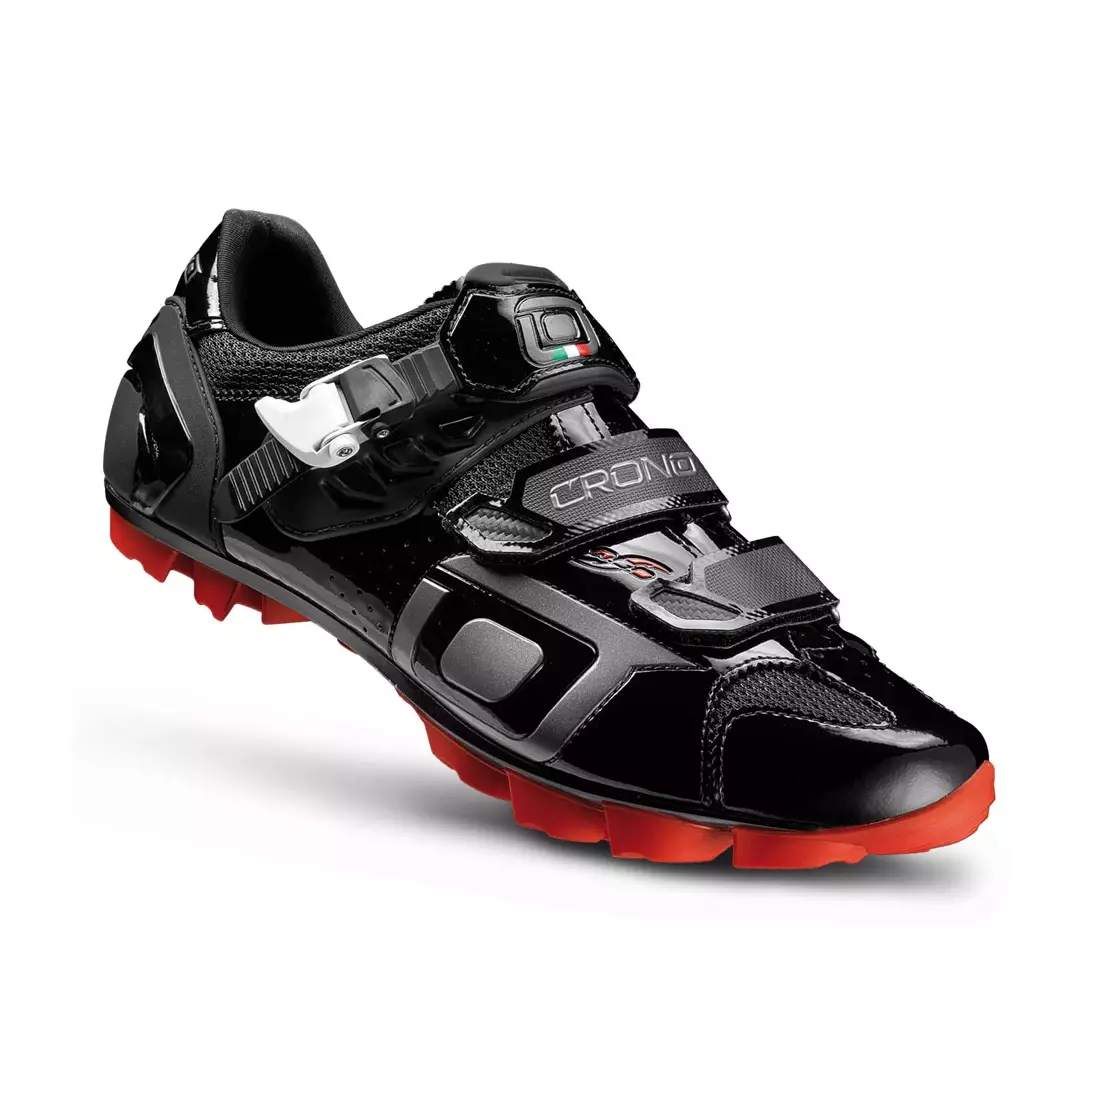 CRONO TRACK - MTB cycling shoes - color: Black